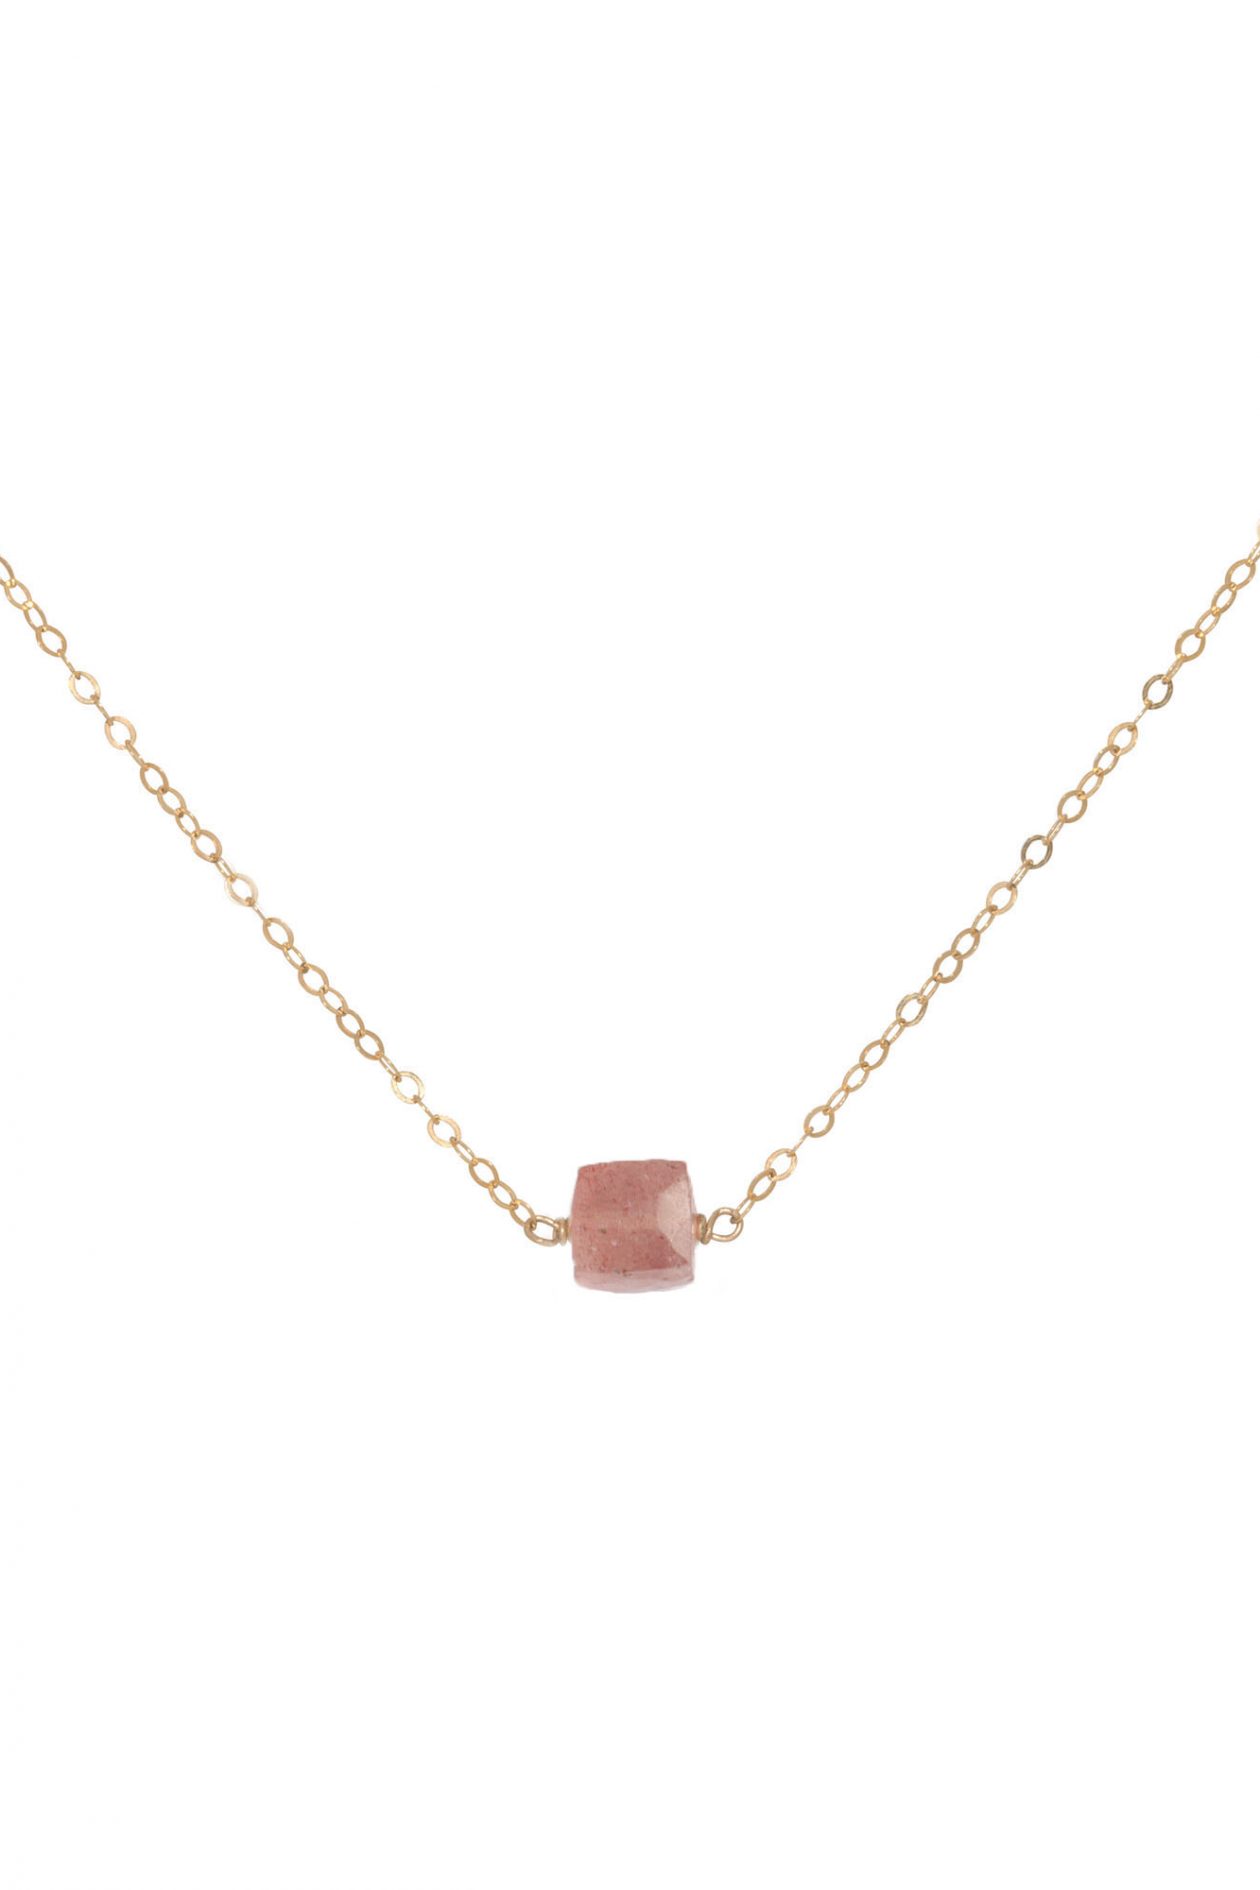 JK Designs Gemstone Cube Necklace in Strawberry Quartz